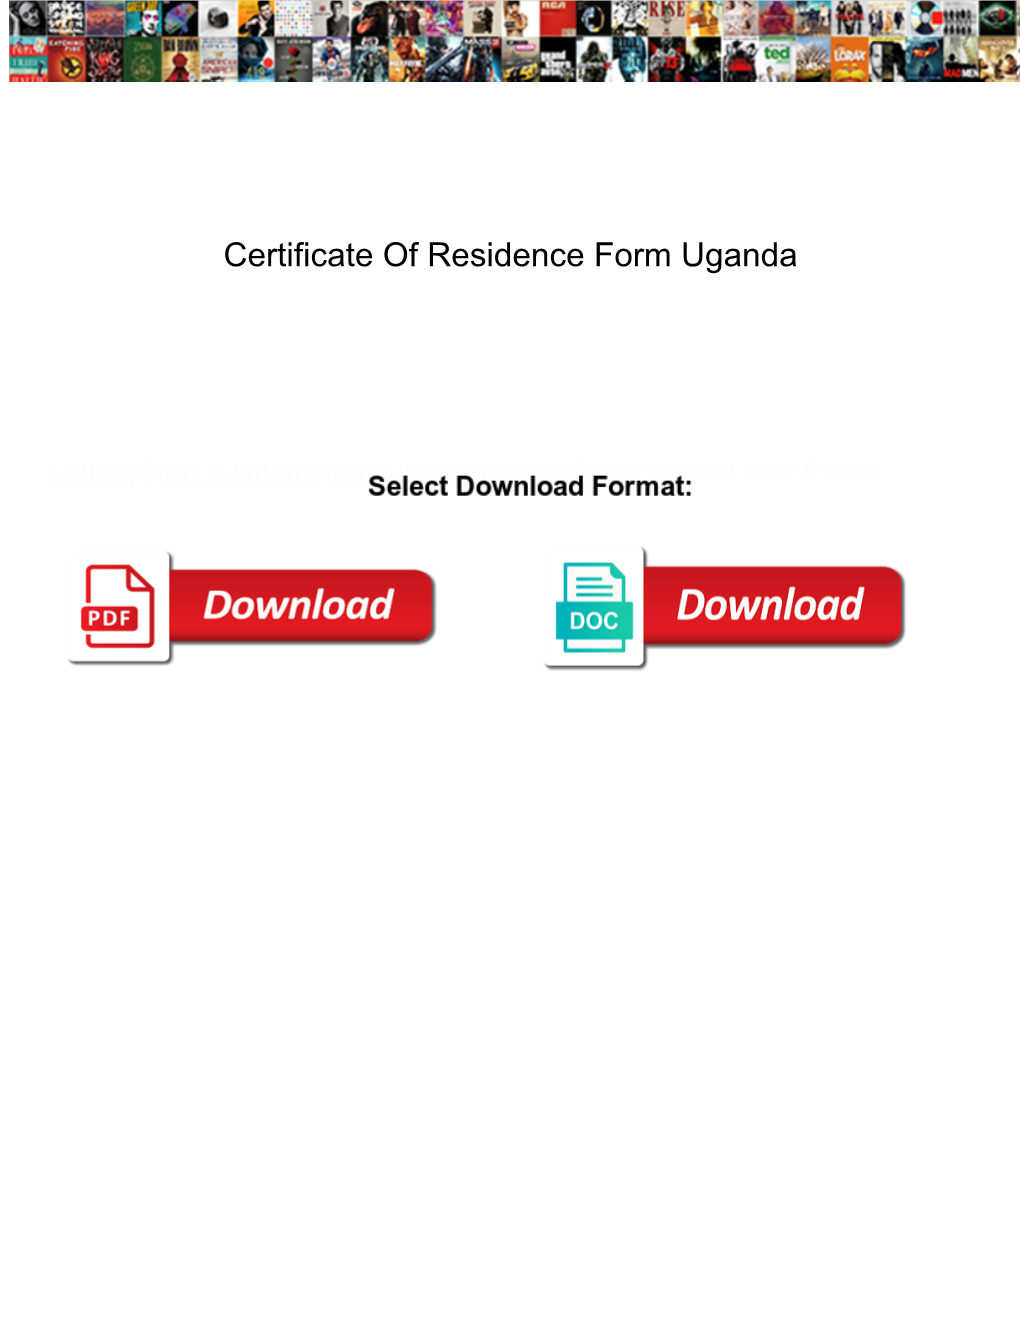 Certificate of Residence Form Uganda